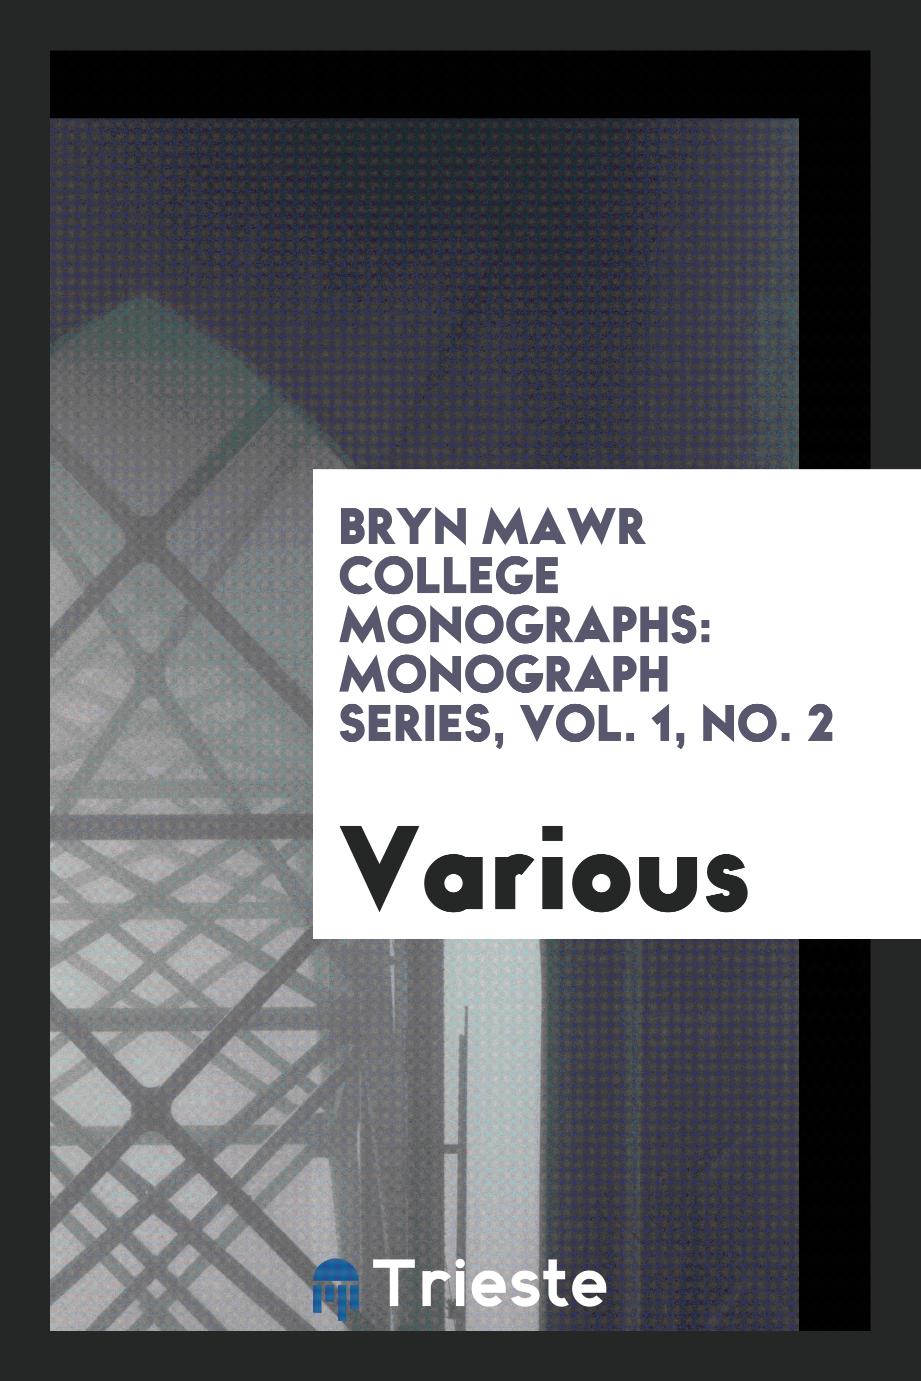 Bryn mawr College Monographs: Monograph series, Vol. 1, No. 2